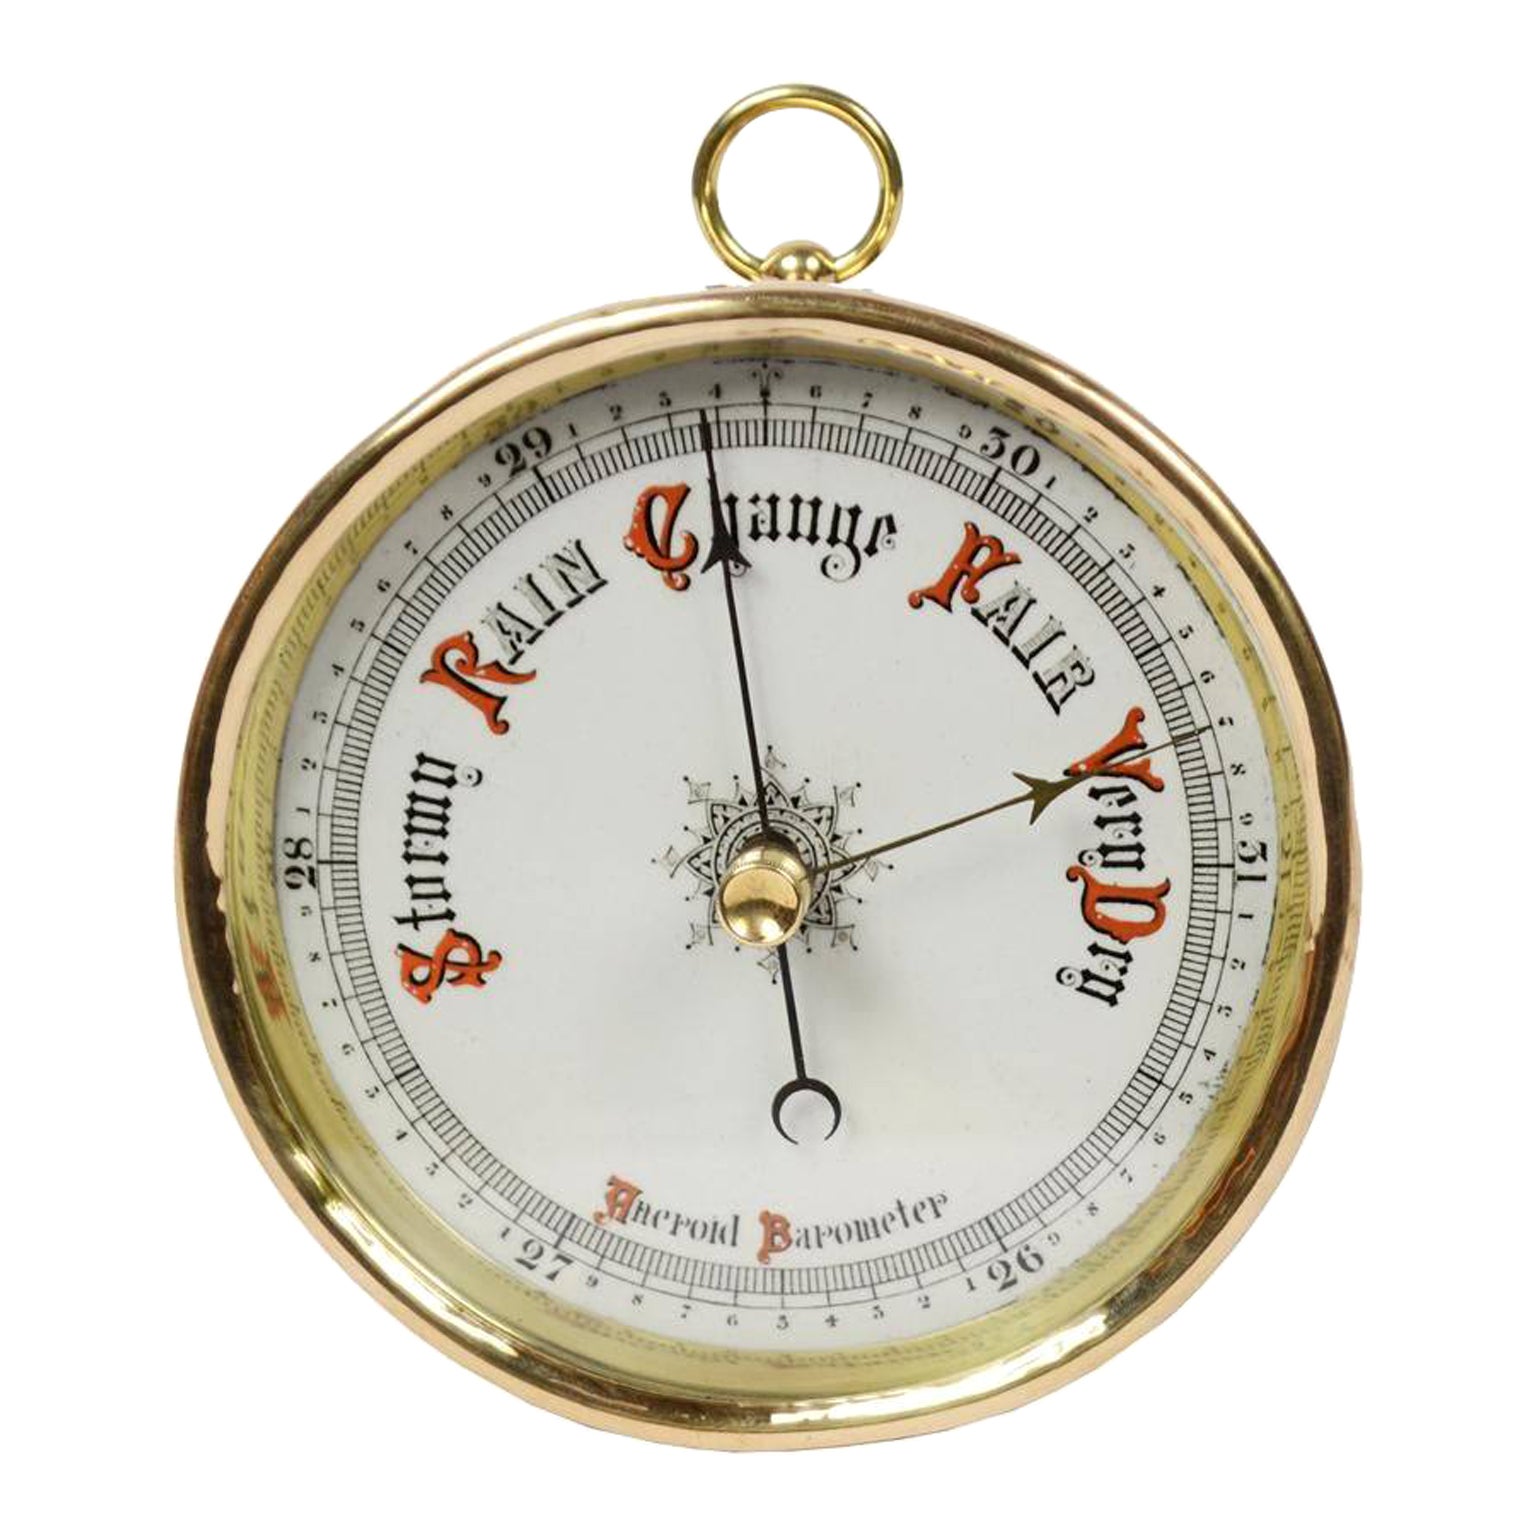 Vintage Aneroid Barometer, Late 19th century 